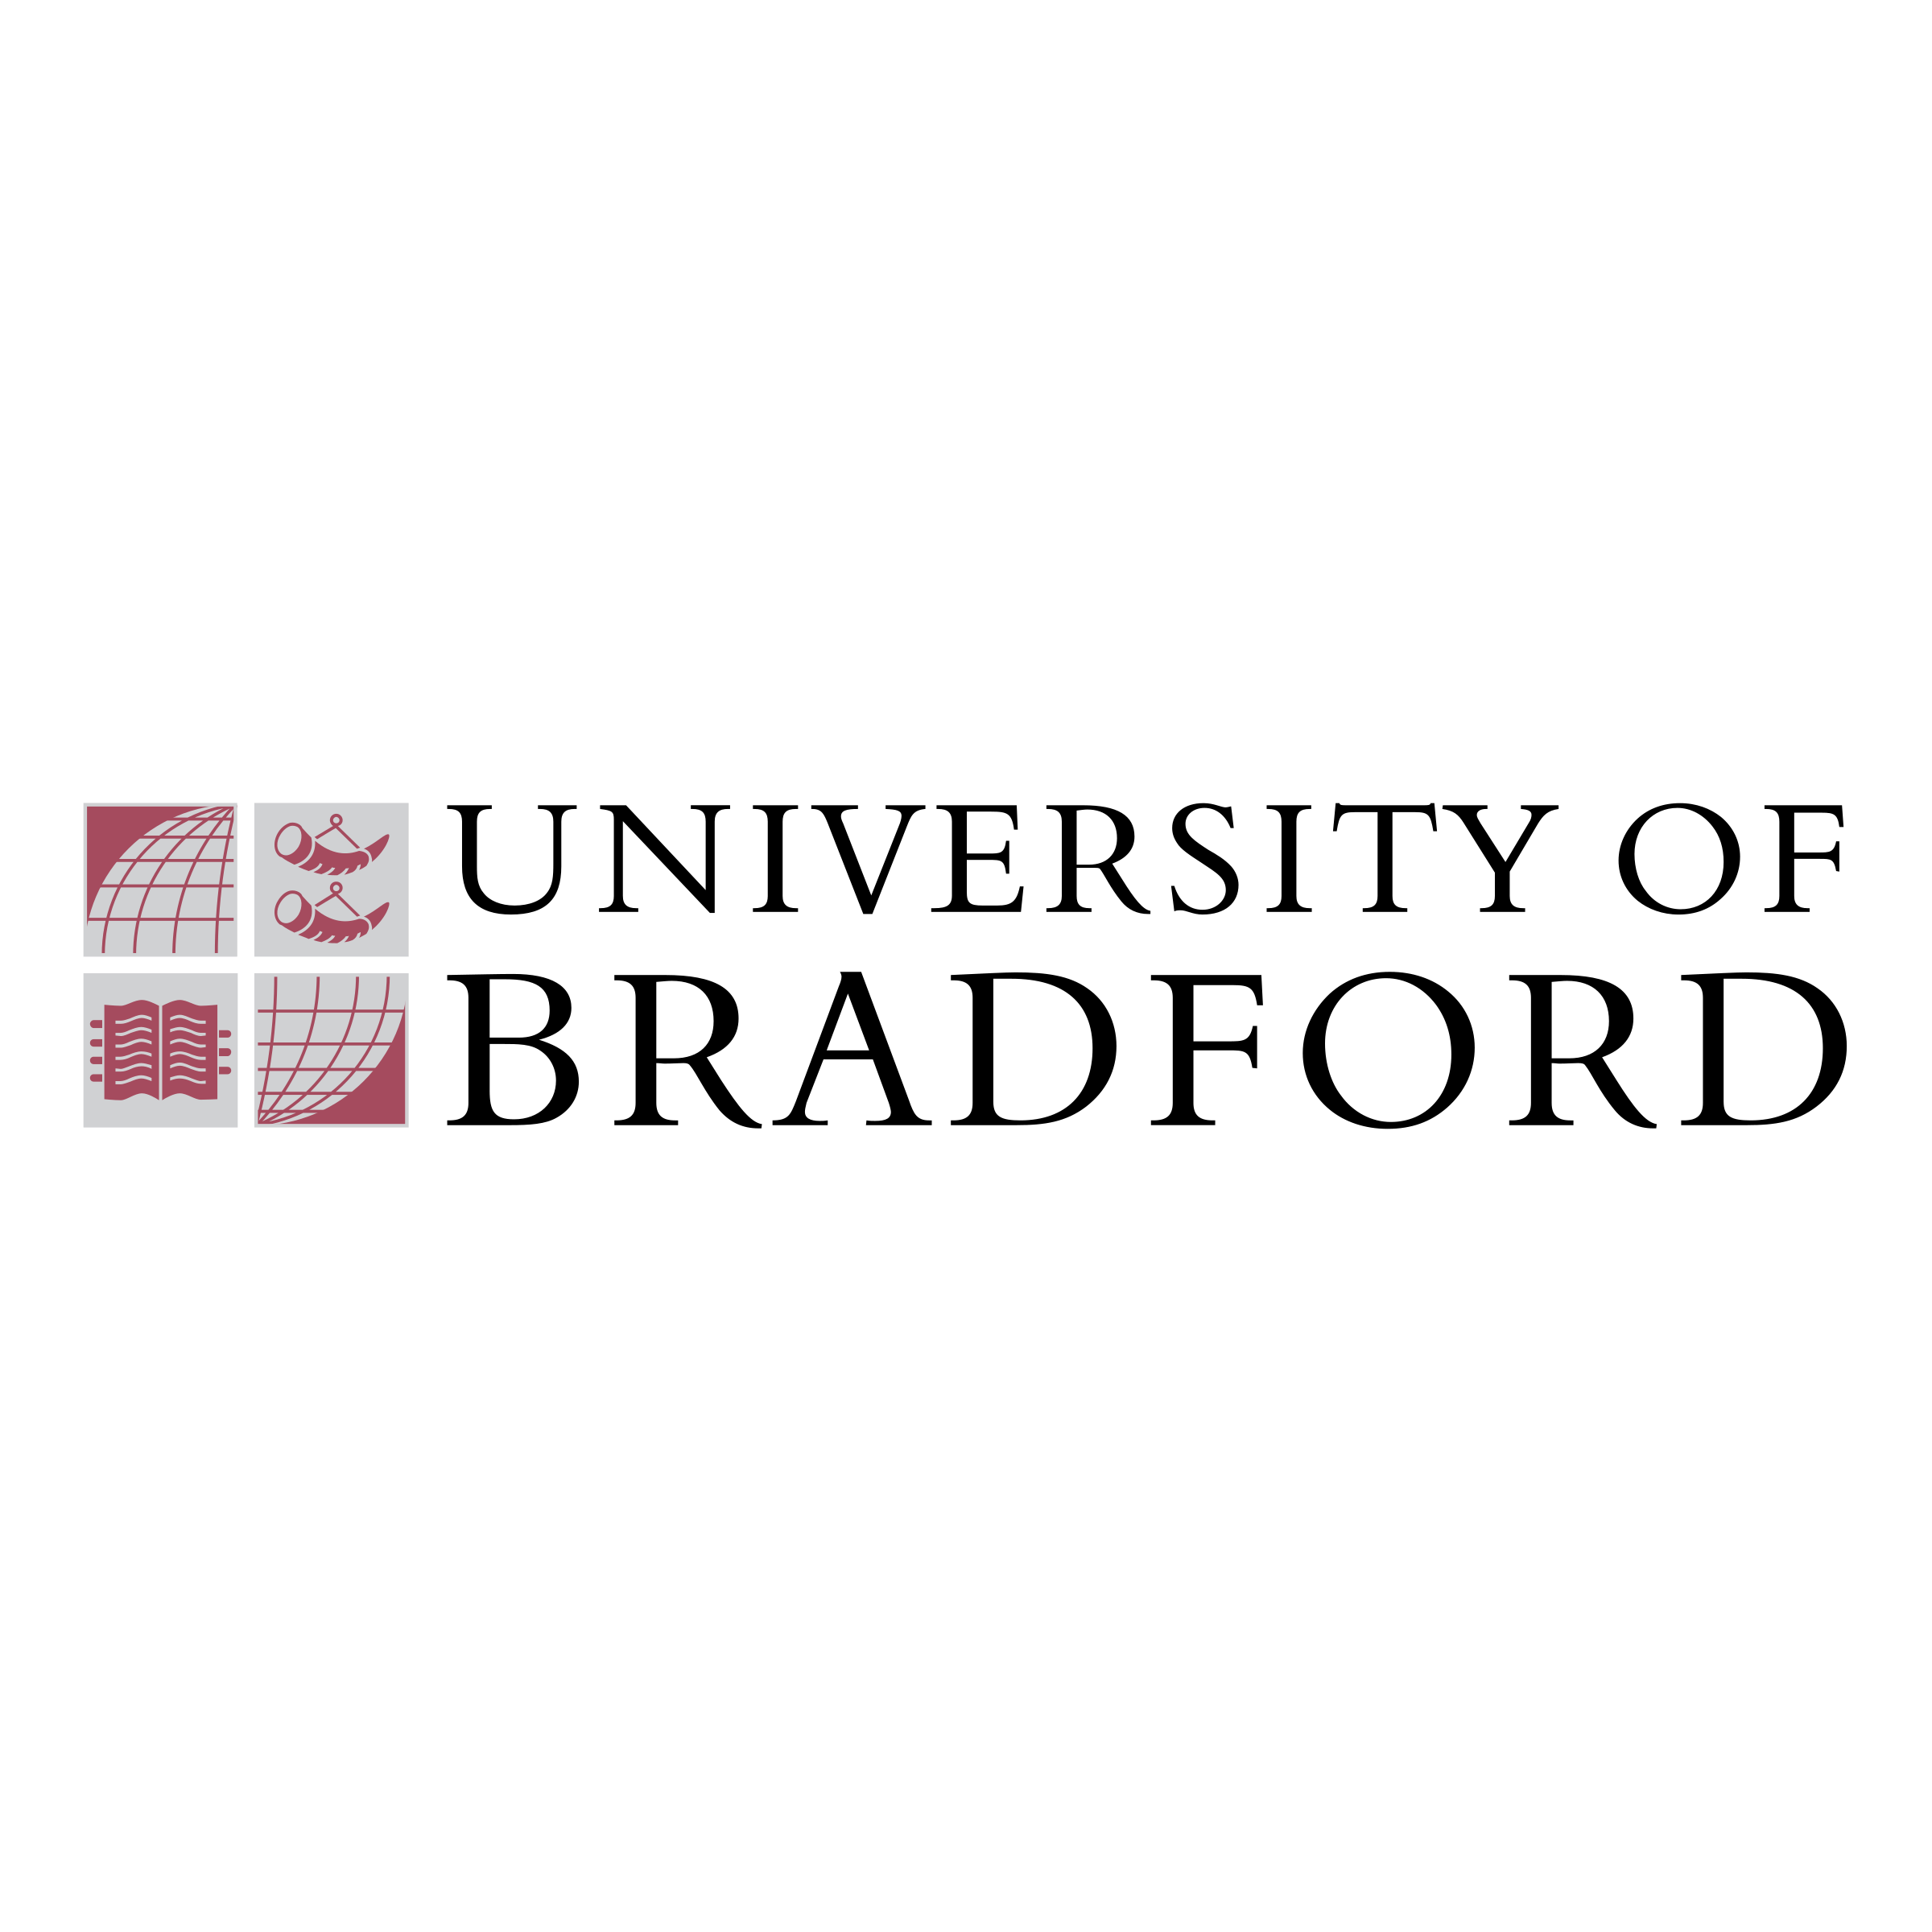 Bradford Logo - University of Bradford Logo PNG Transparent & SVG Vector